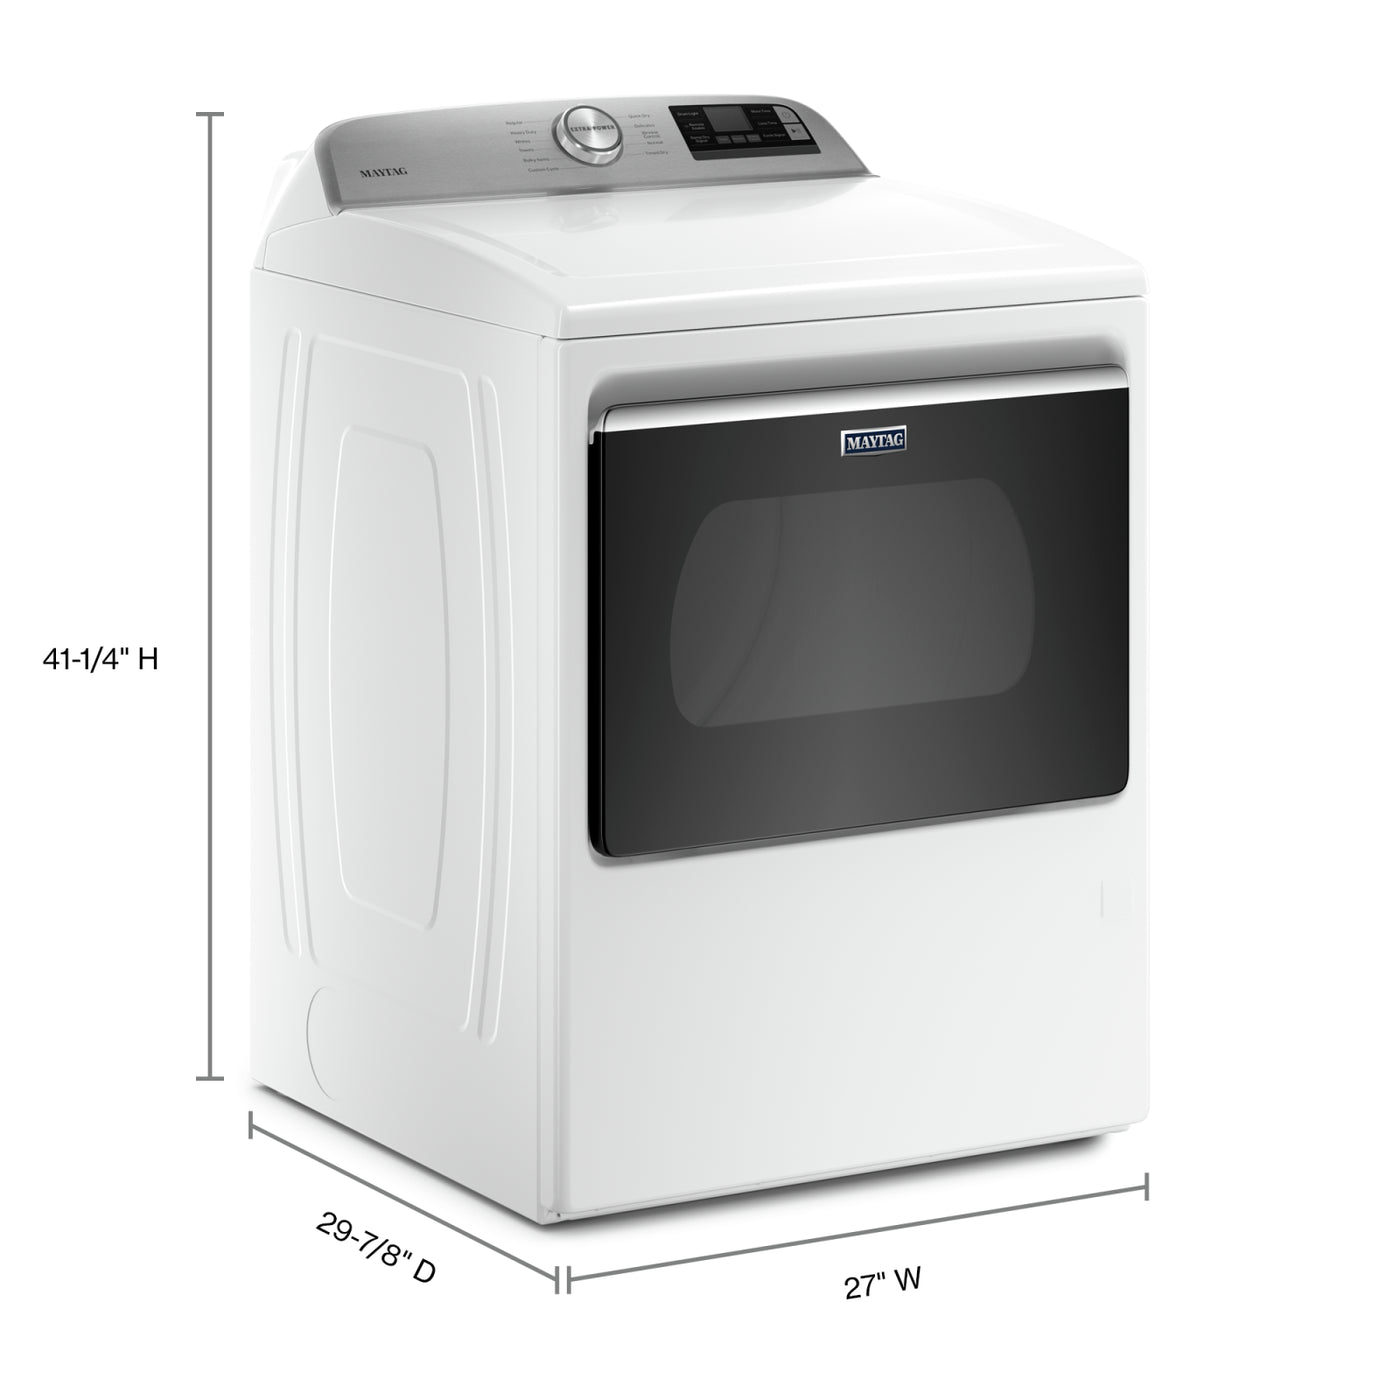 Maytag White Smart Gas Dryer (7.4 cu.ft.) - MGD6230HW